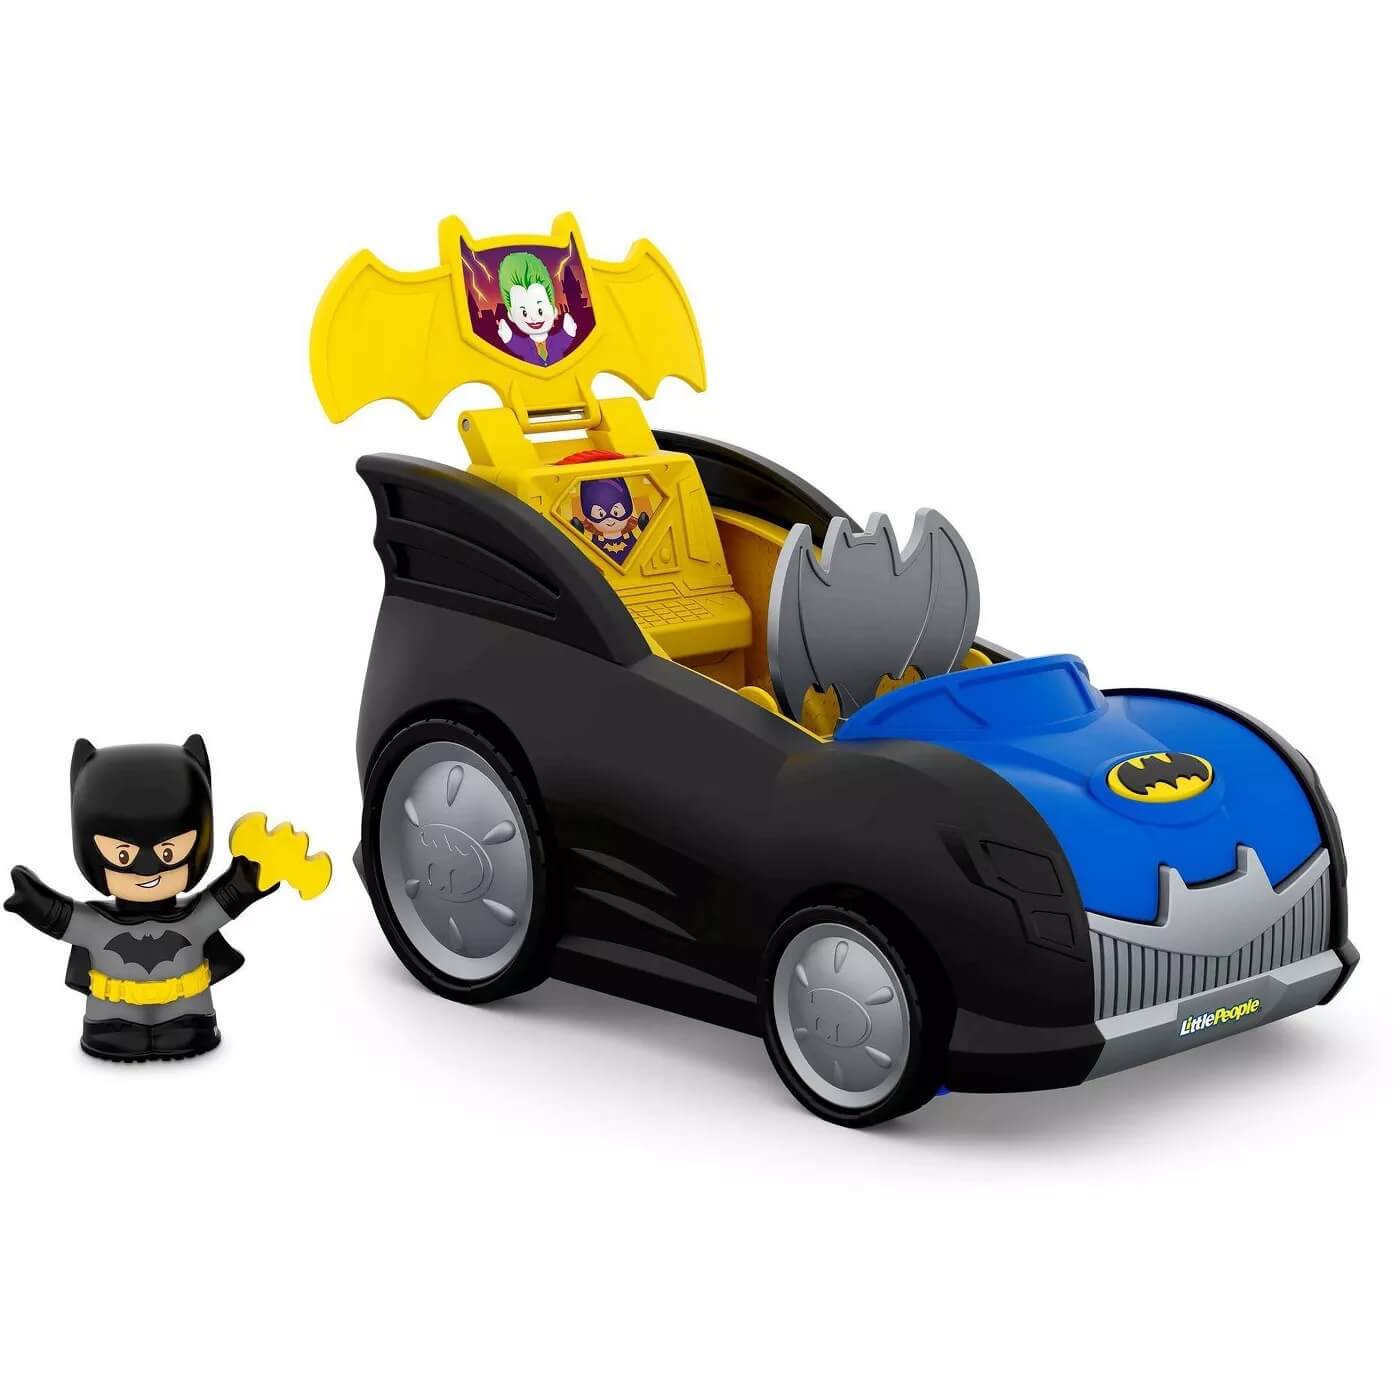 Little People DC Super Friends 2-in-1 Batmobile